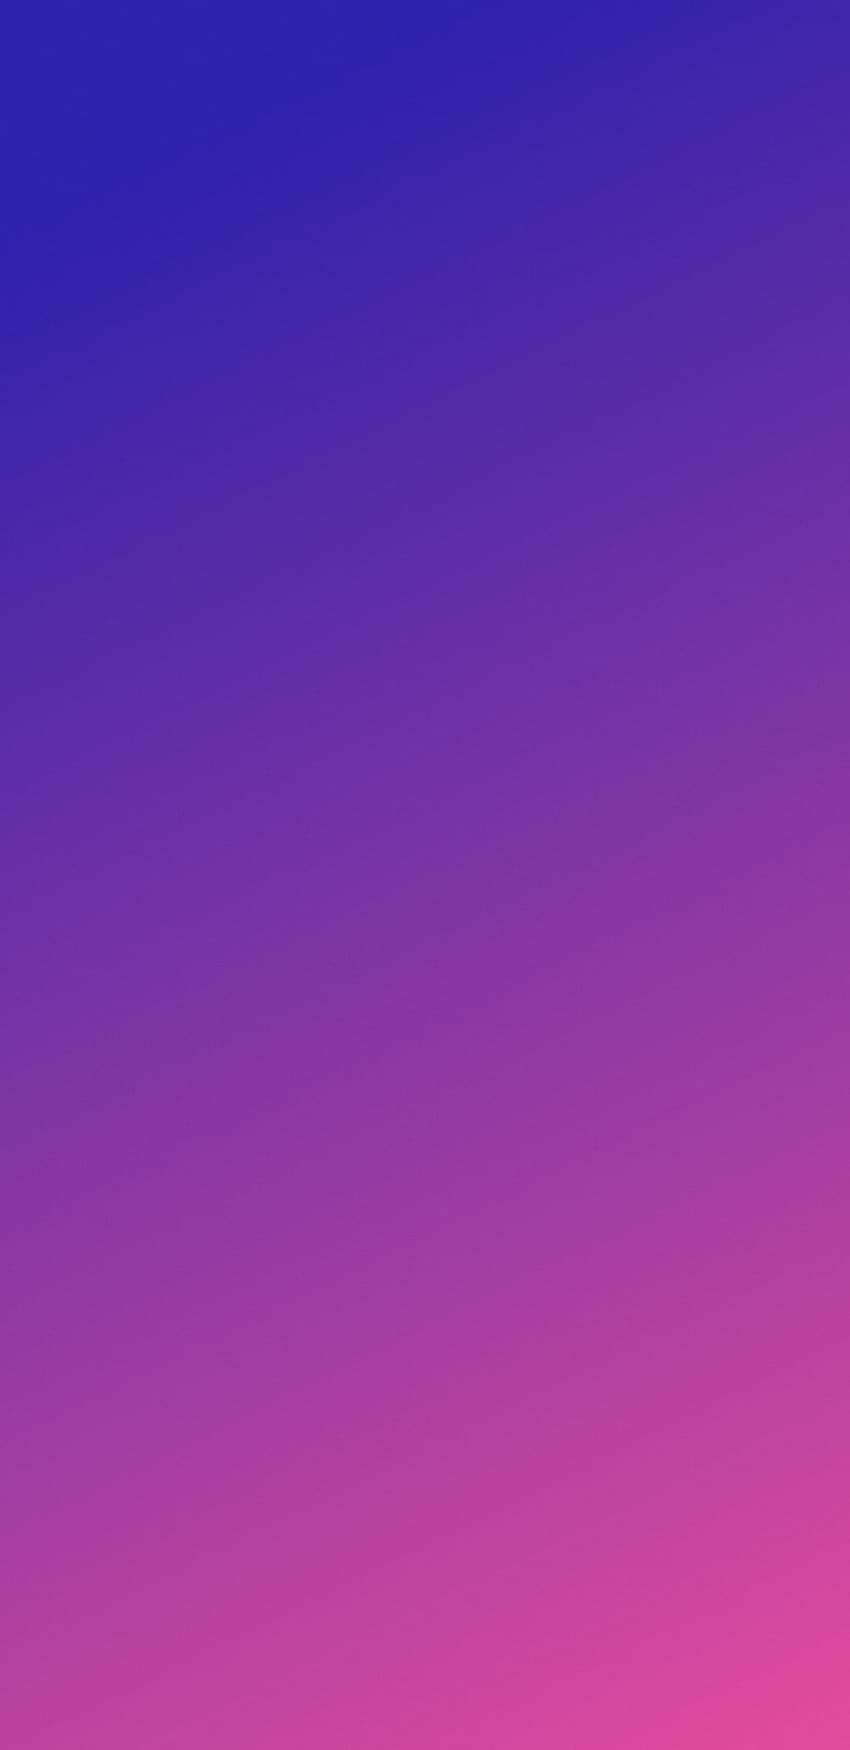 150 Blue And Purple Gradient, purple fade aesthetic HD phone wallpaper